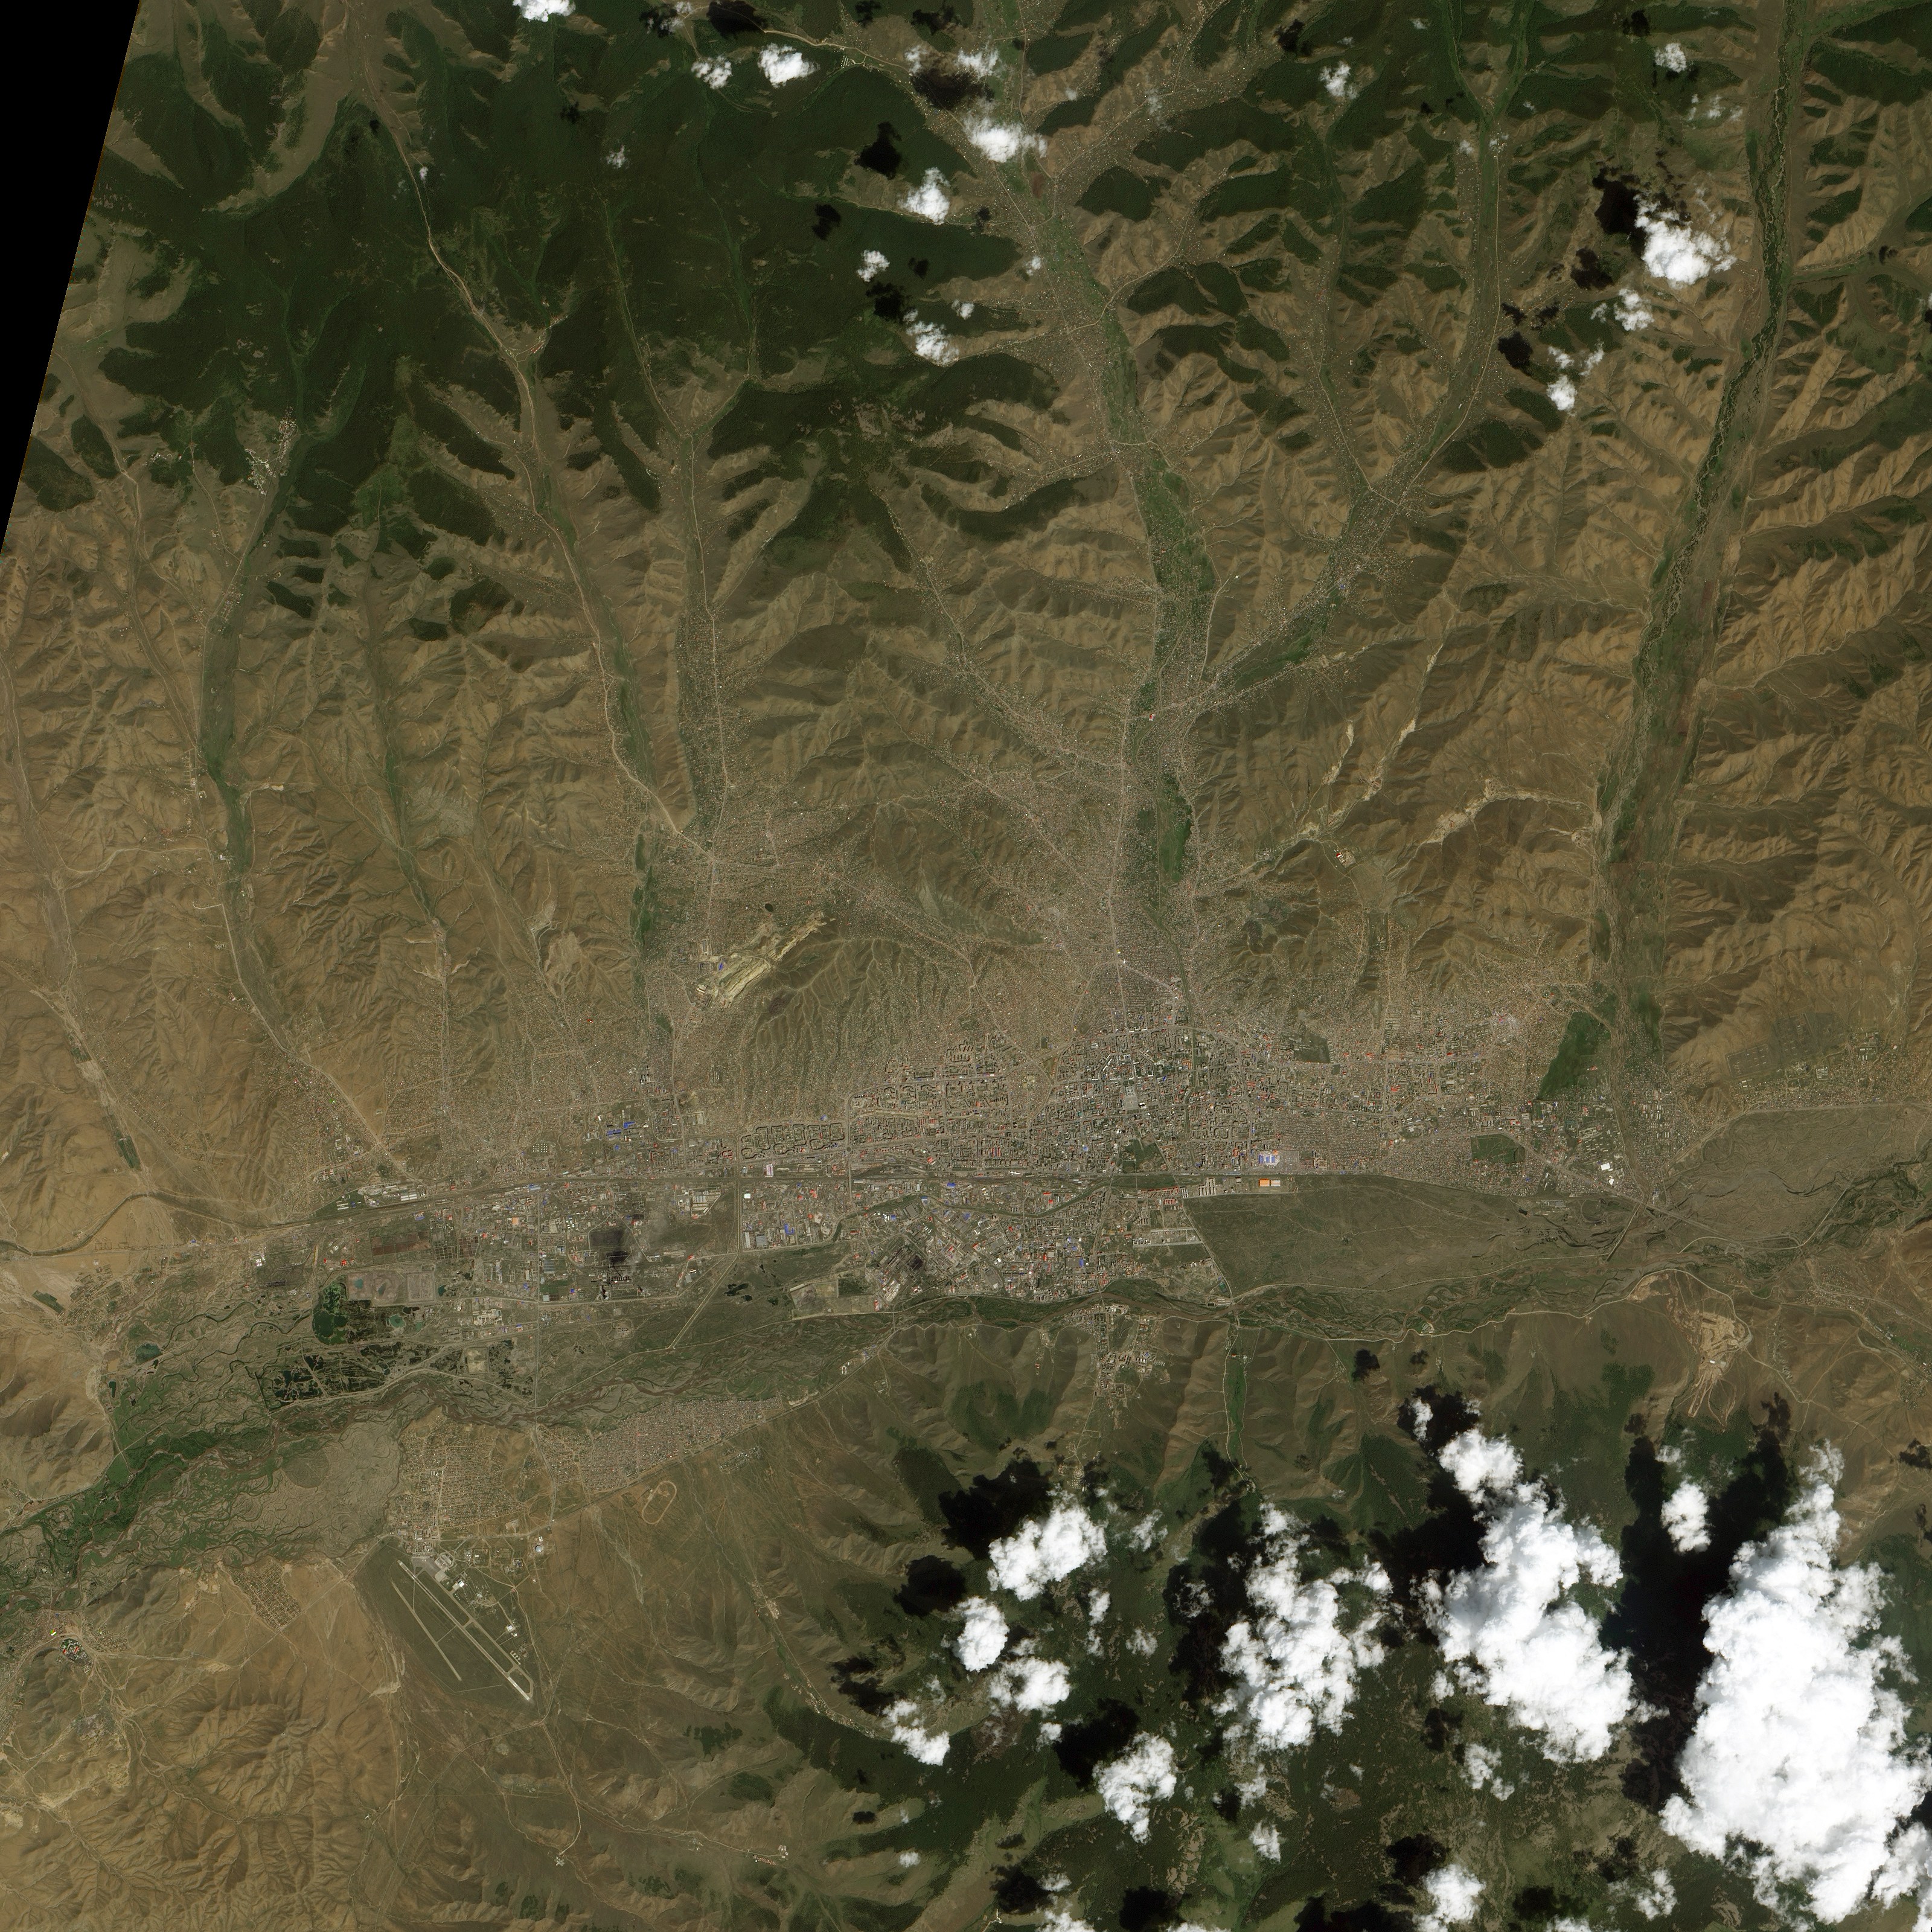 Ulan Bator, Mongolia, satellite image ALI sensor EO-1 satellite, 2009-07-23 